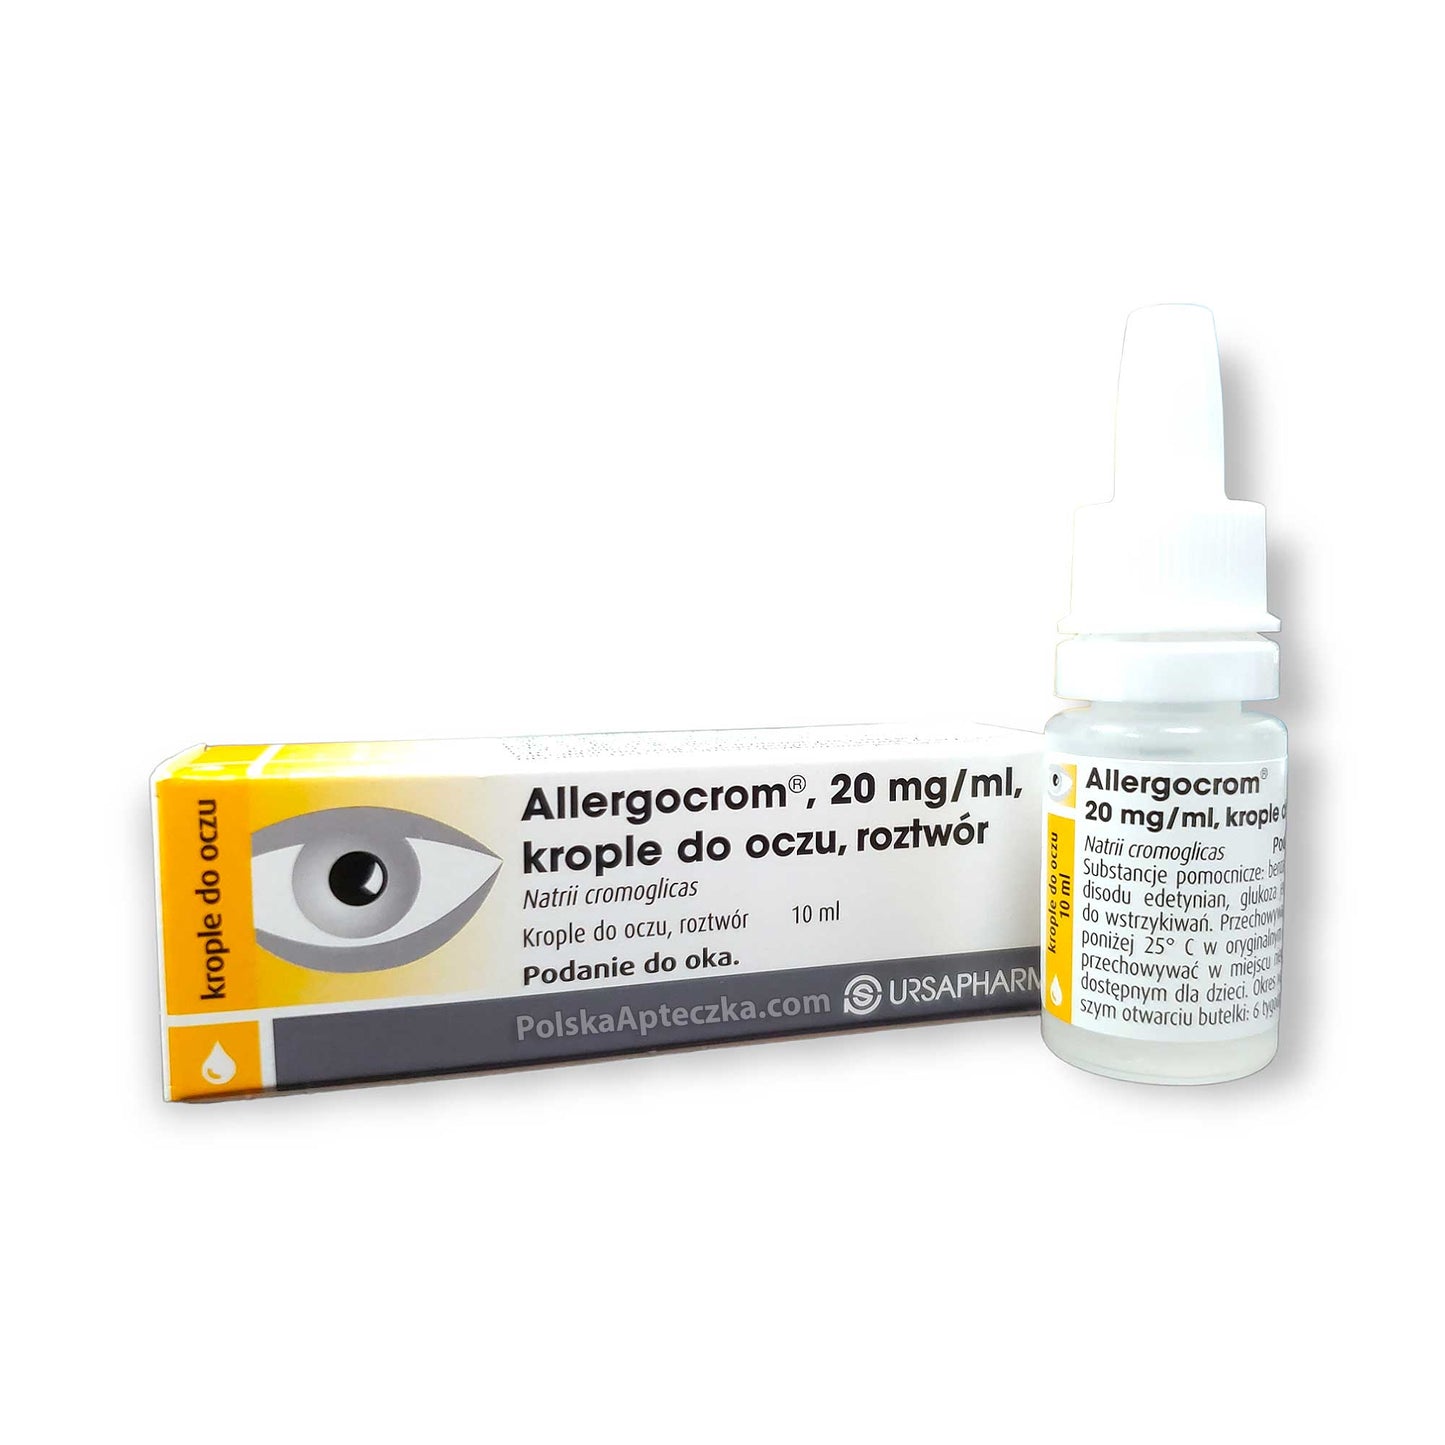 Allergocrom krople do oczu, 10 ml